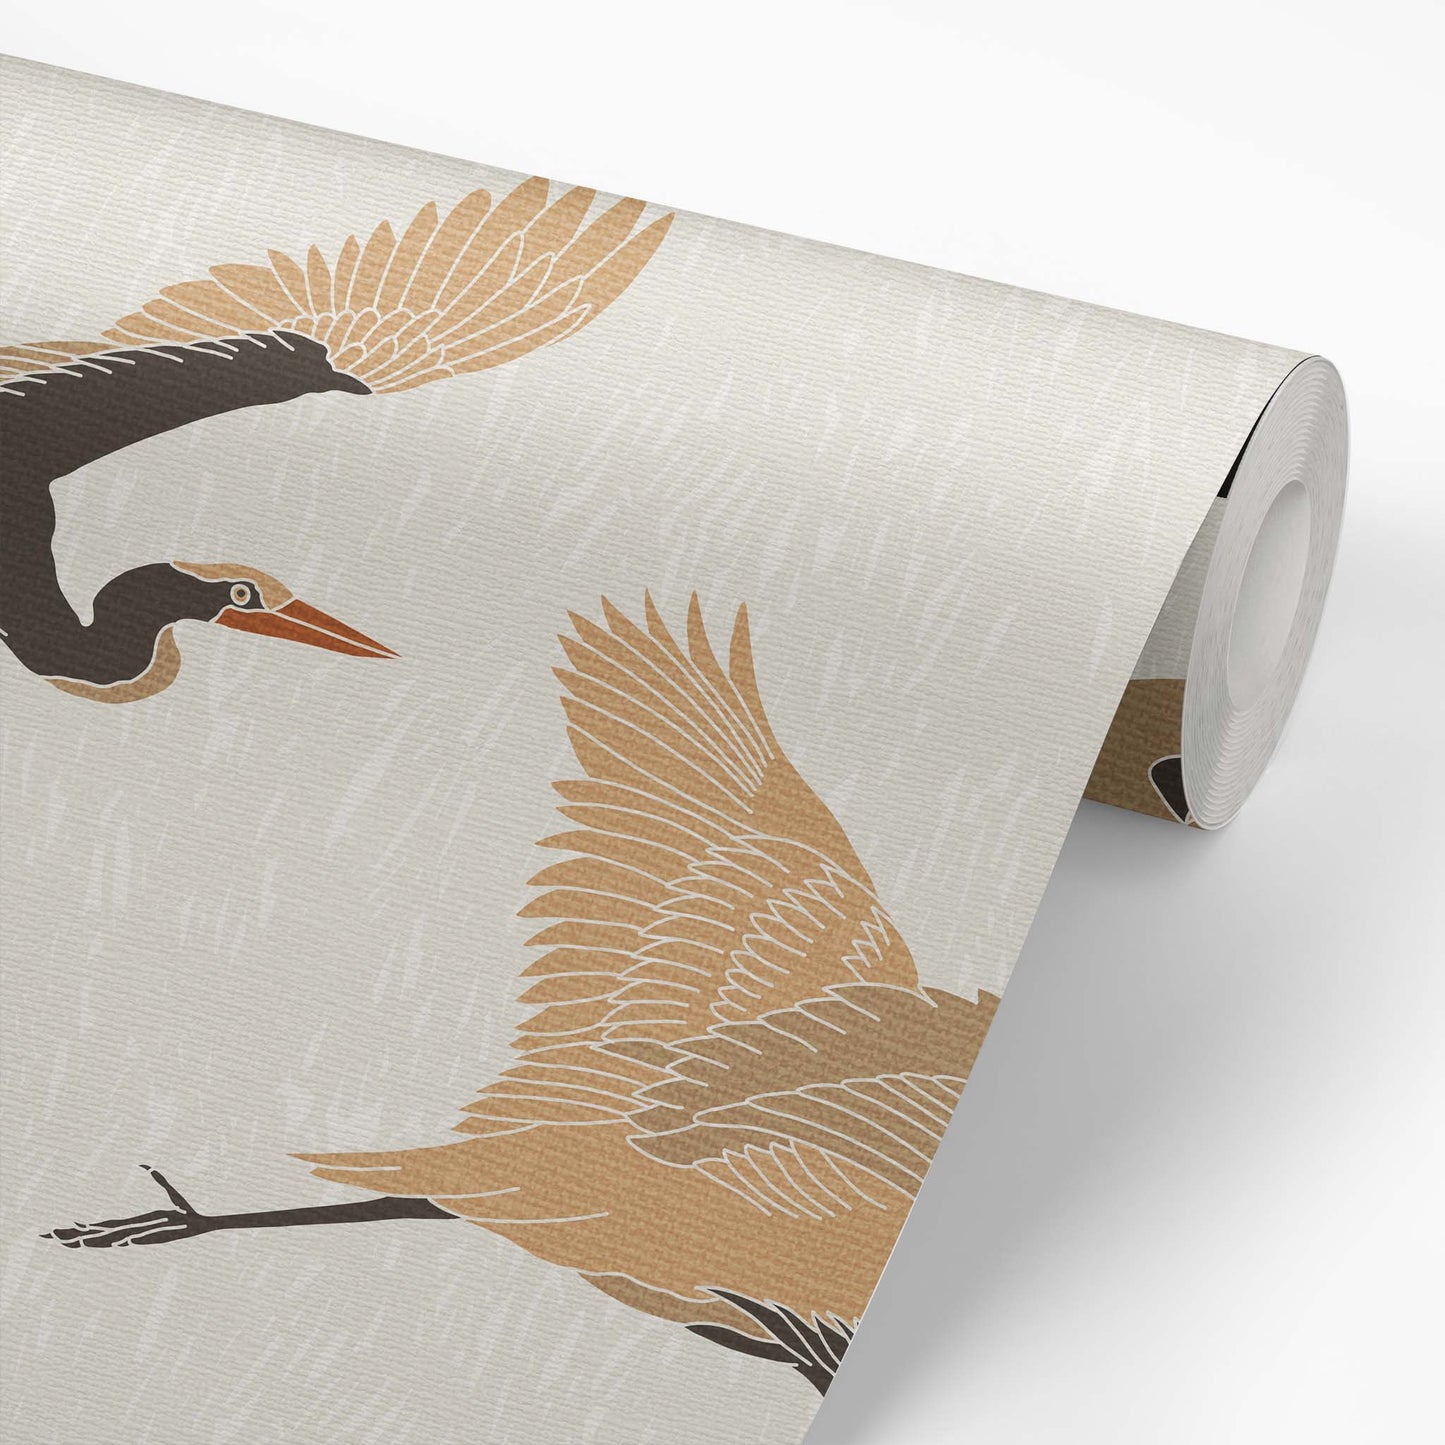 Flying Herons Wallpaper - Light Tan